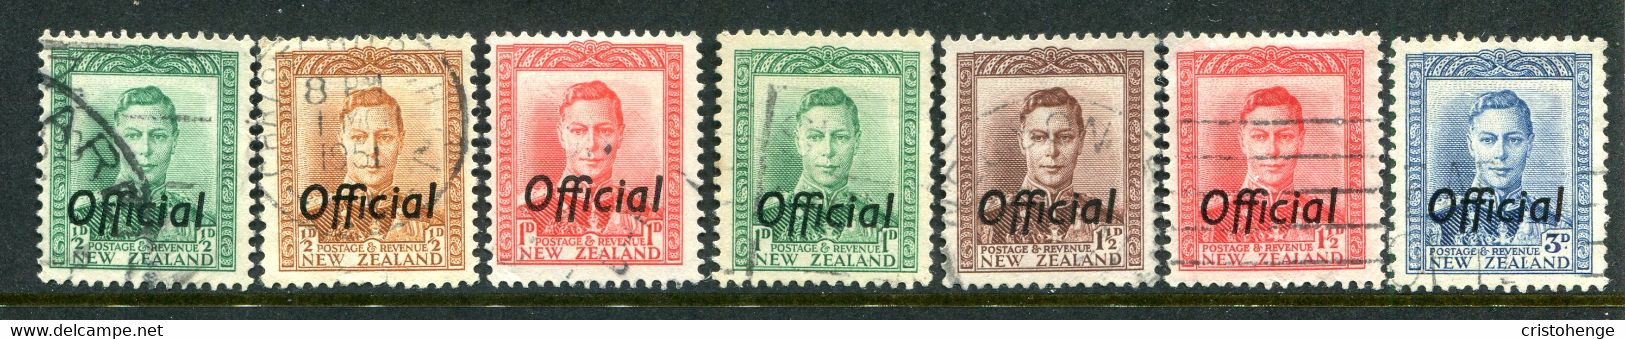 New Zealand 1938-51 Officials - KGVI - Set Used (SG O134-O140) - Servizio